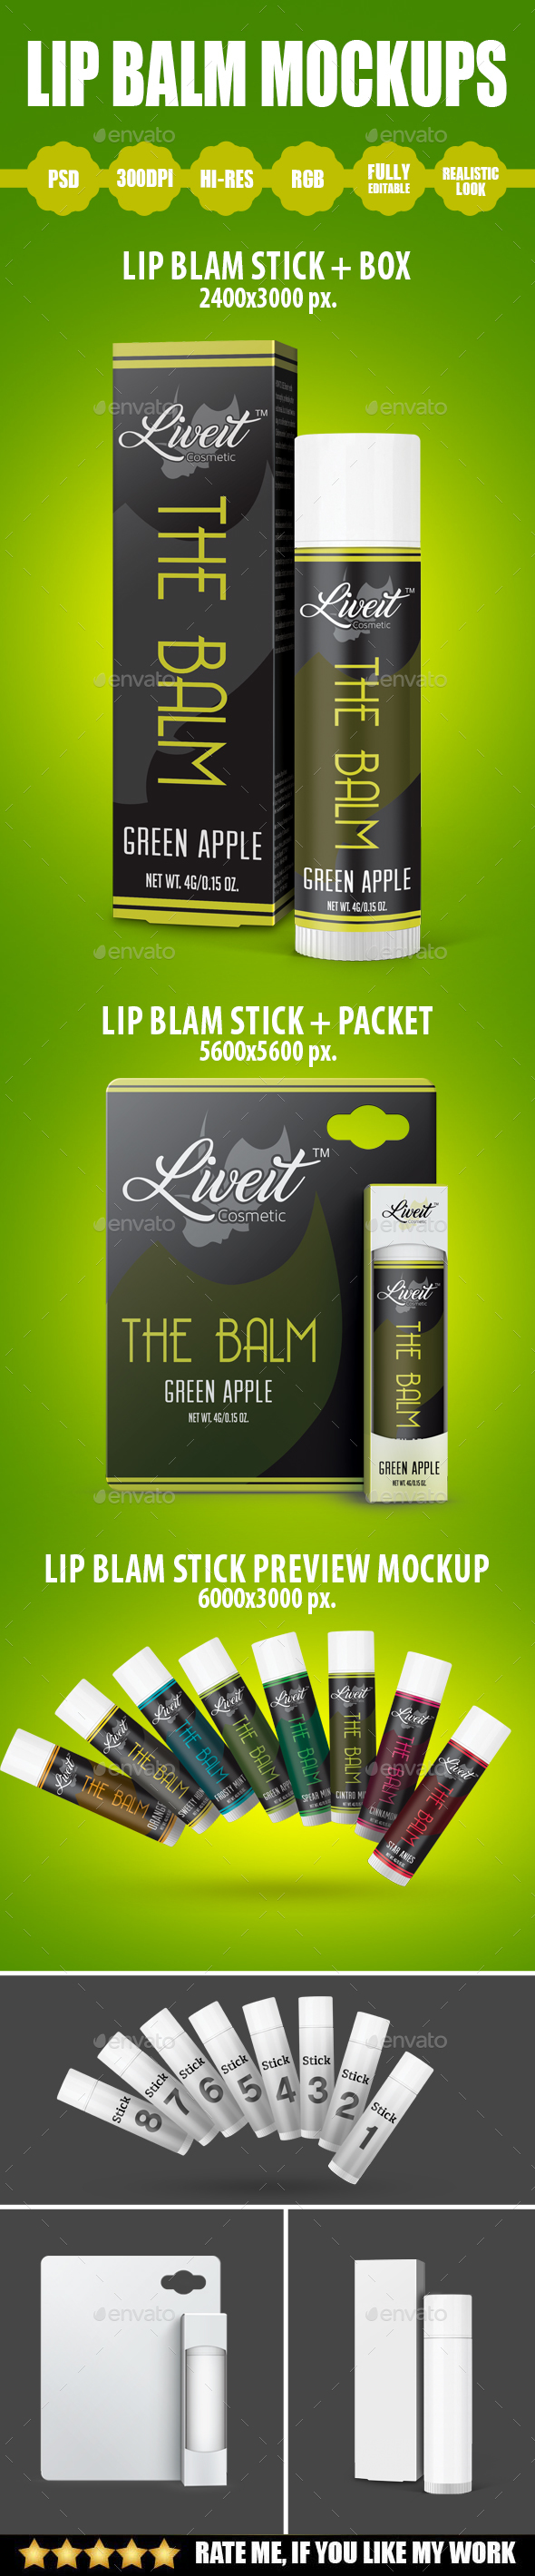 Download Lip Balm Mockups by Artsignz | GraphicRiver